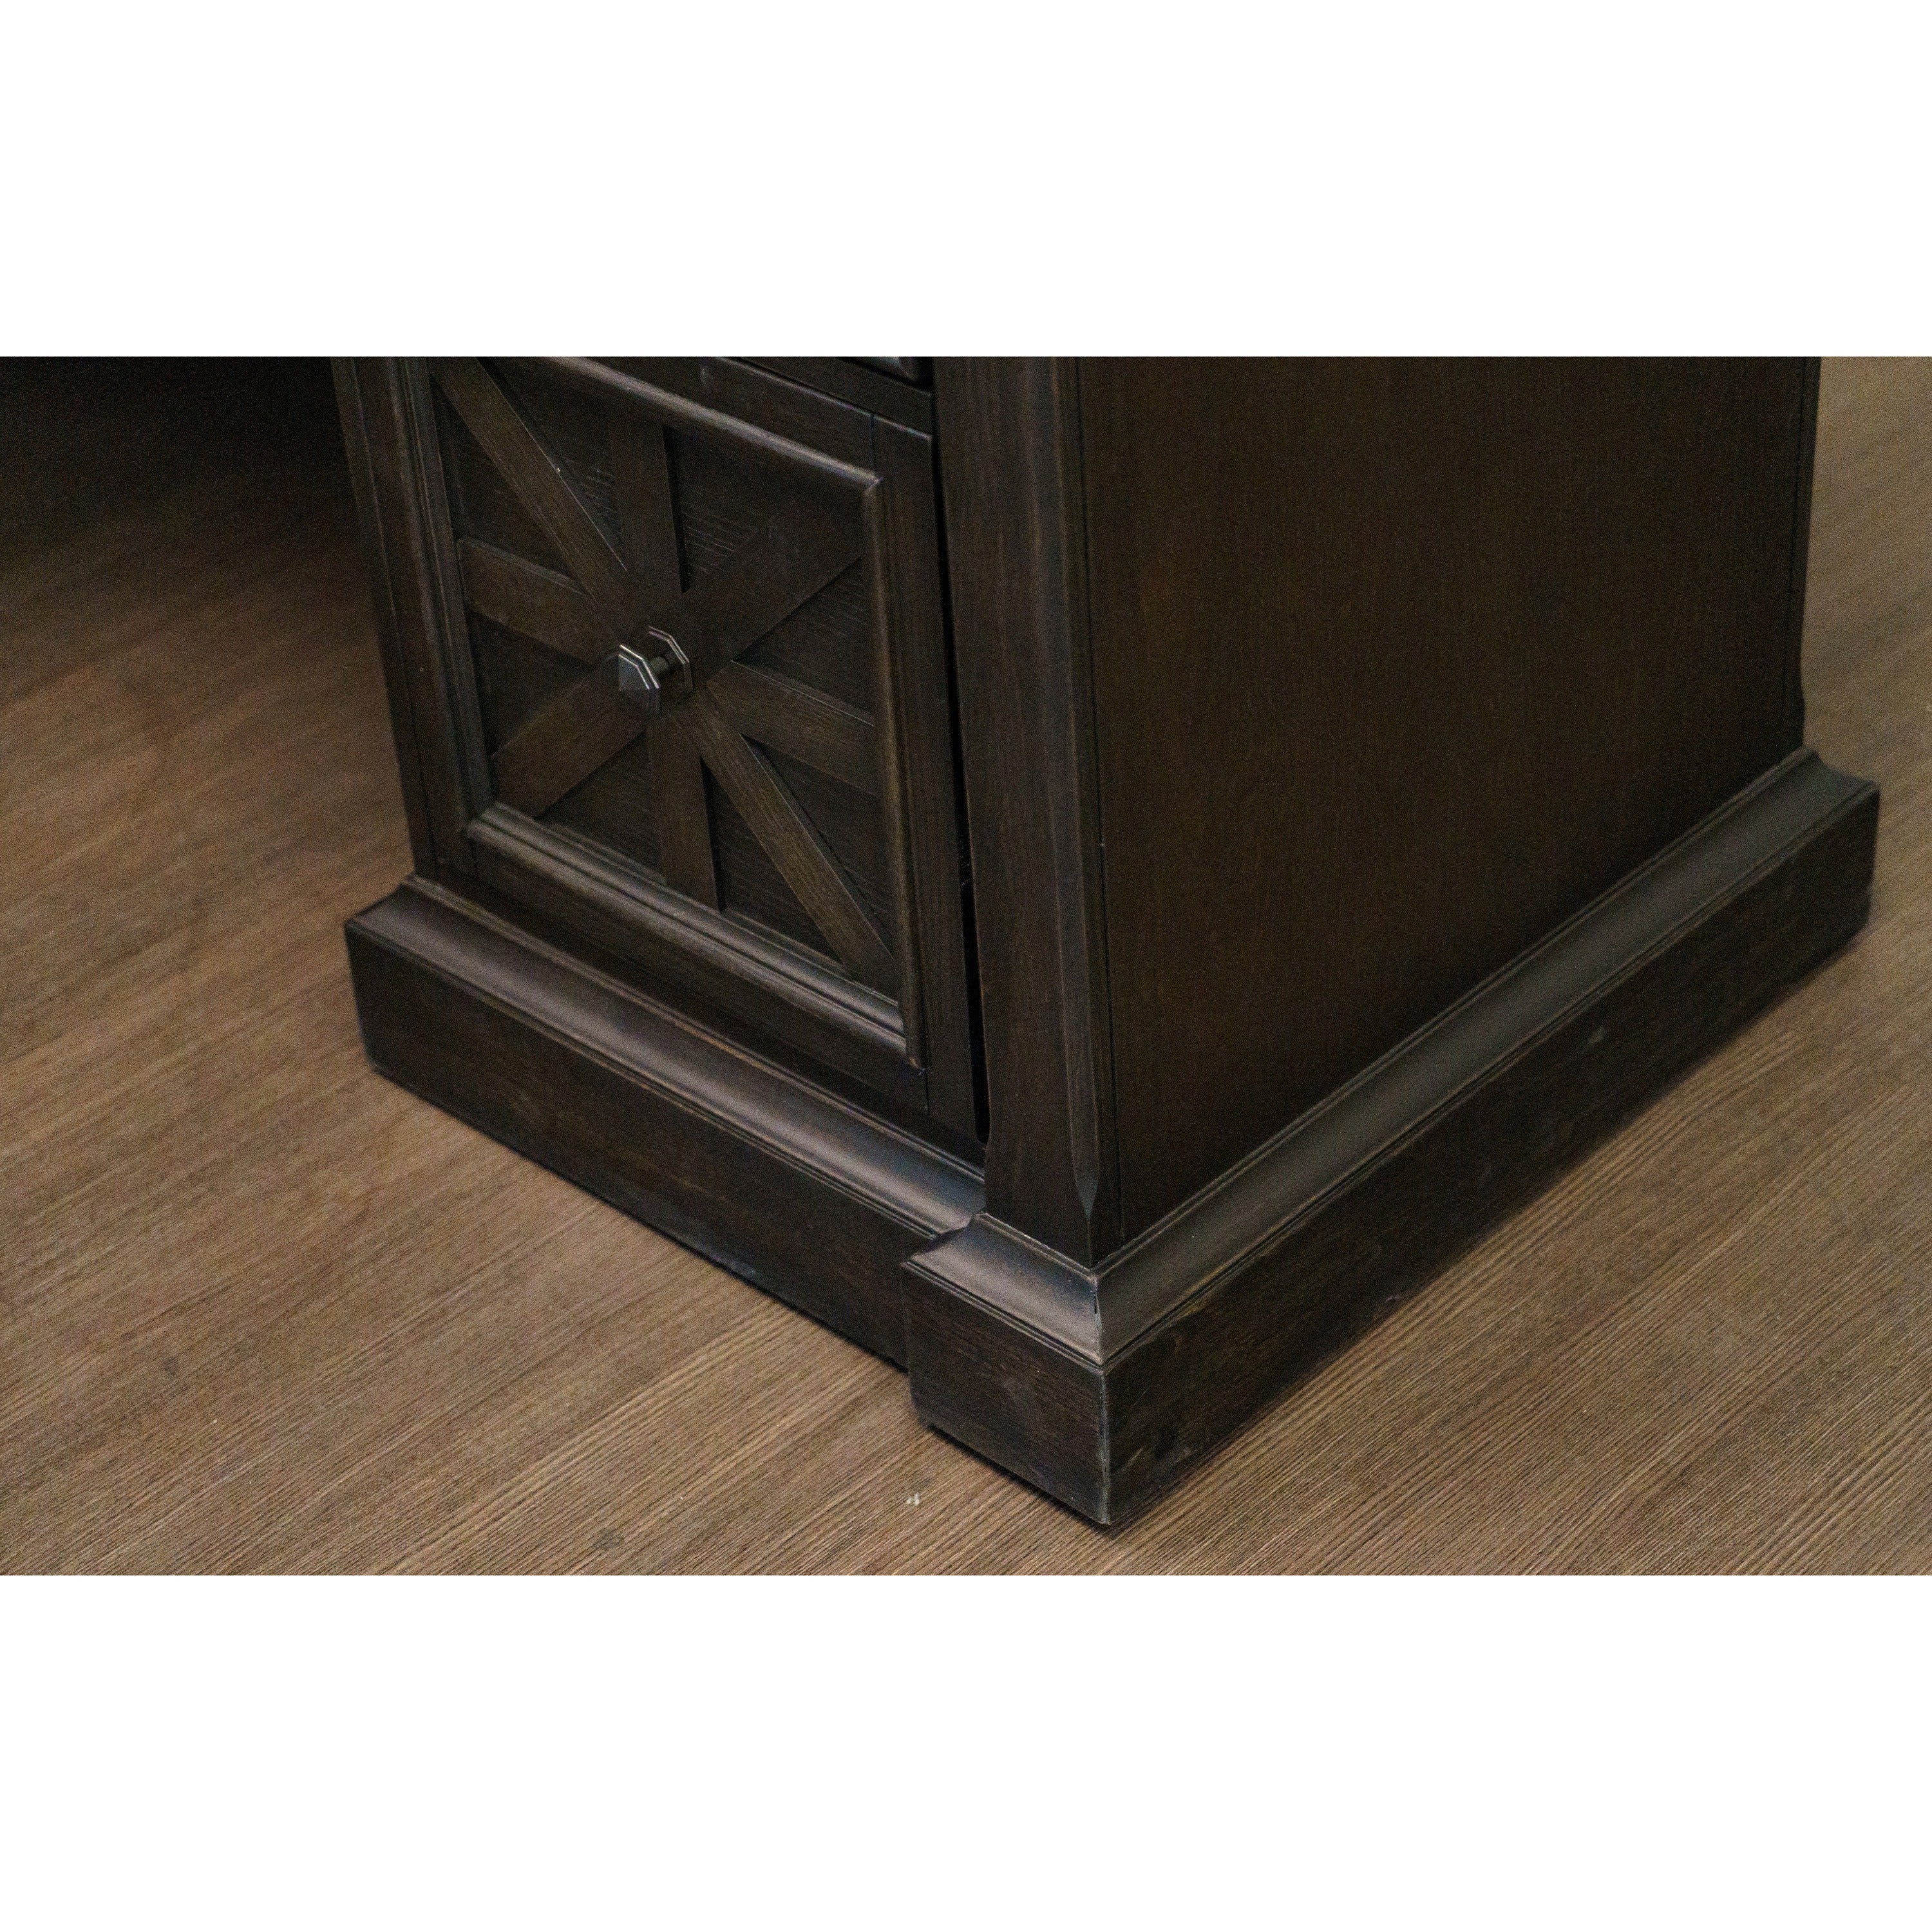 martin-kingston-desk-with-pedestal-box-1-of-2-66-x-3030-4-x-utility-file-drawers-material-wood-finish-dark-chocolate-rub-through_mrtimkn684r - 2